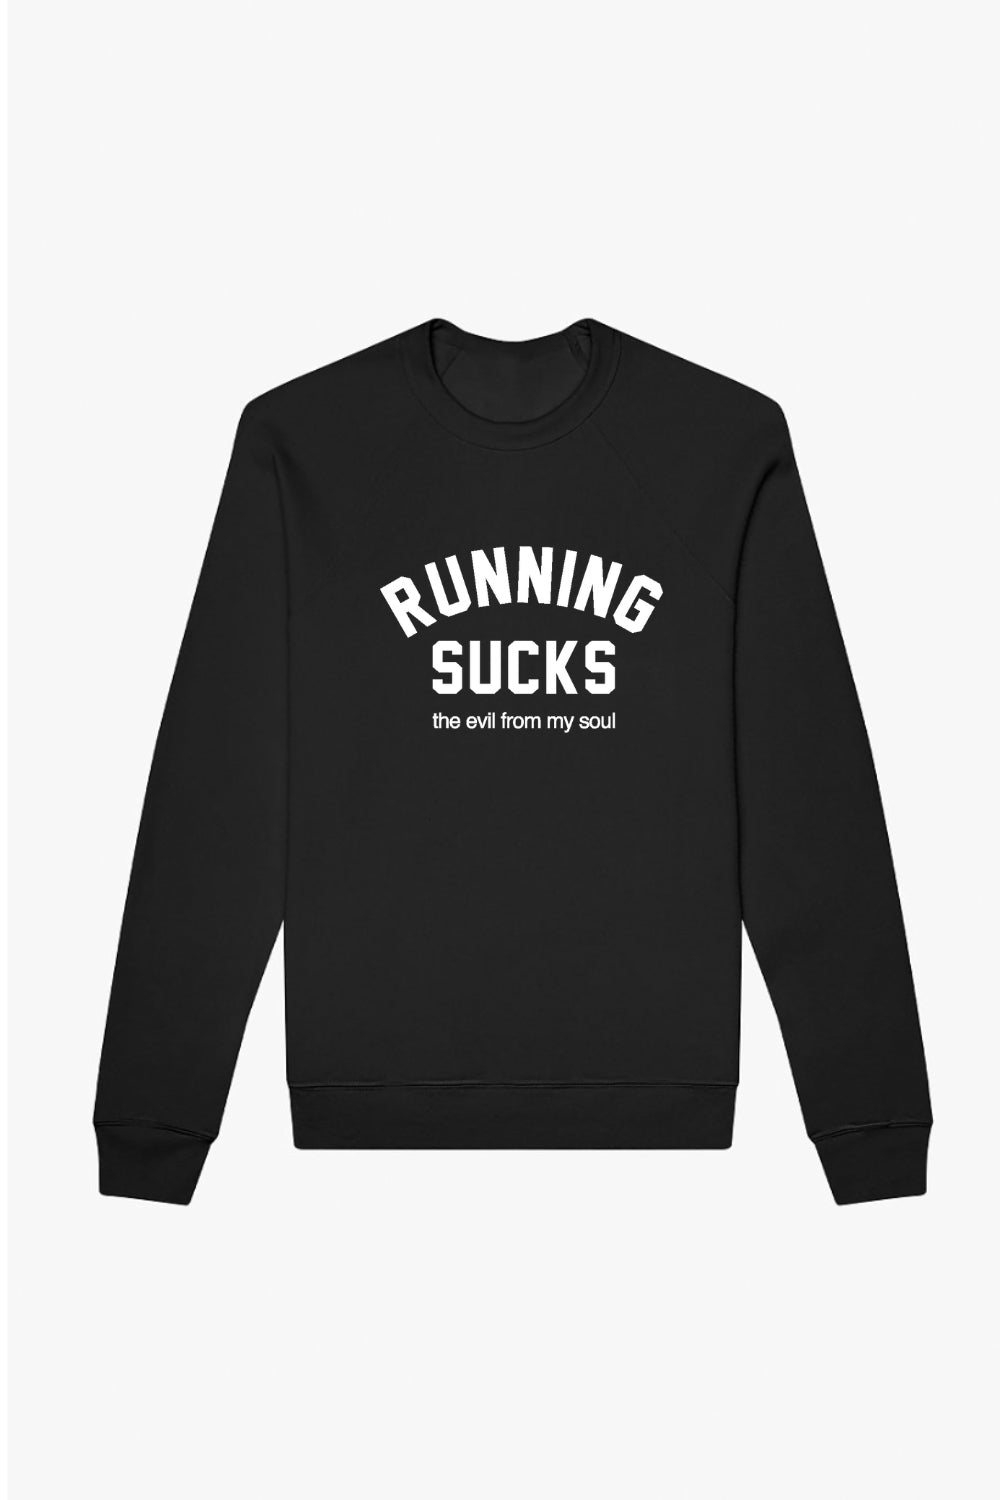 Running Sucks the evil from my soul Sweatshirt